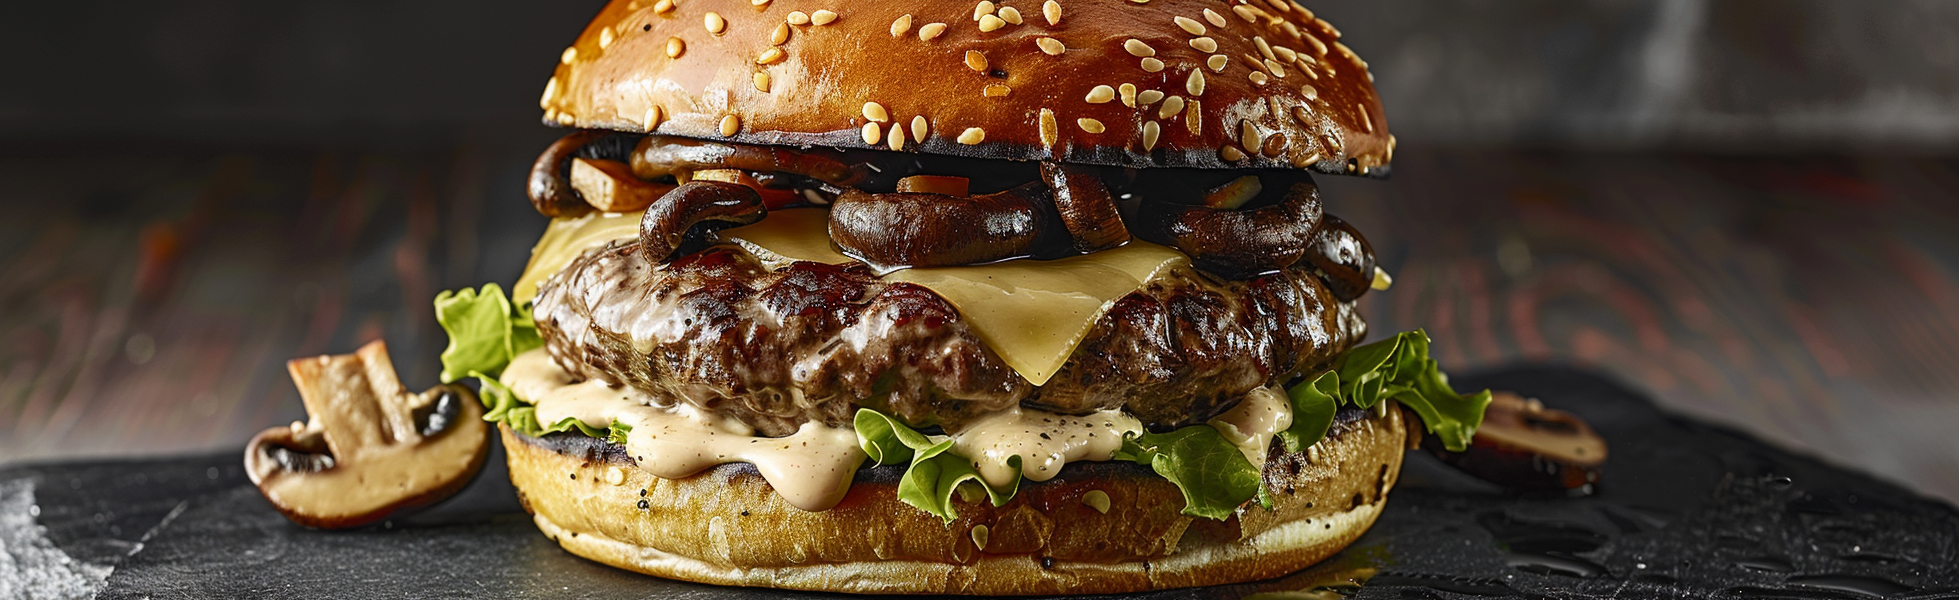 gourmetswissmushroomburger-gourmetburger-1400×432